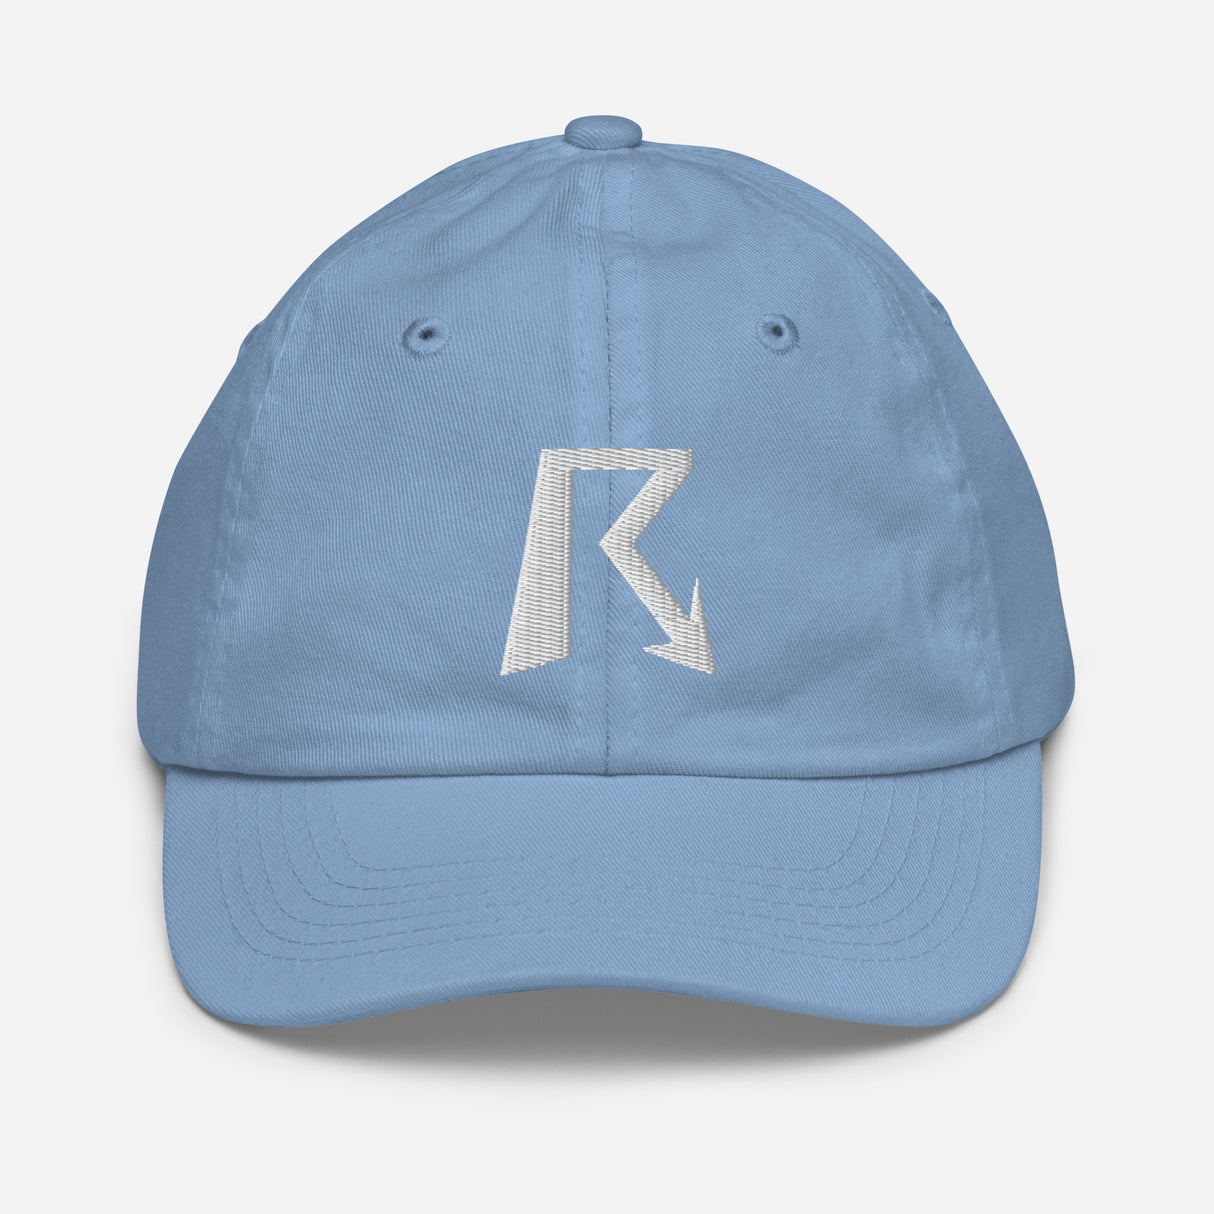 R Logo - Youth Baseball Cap